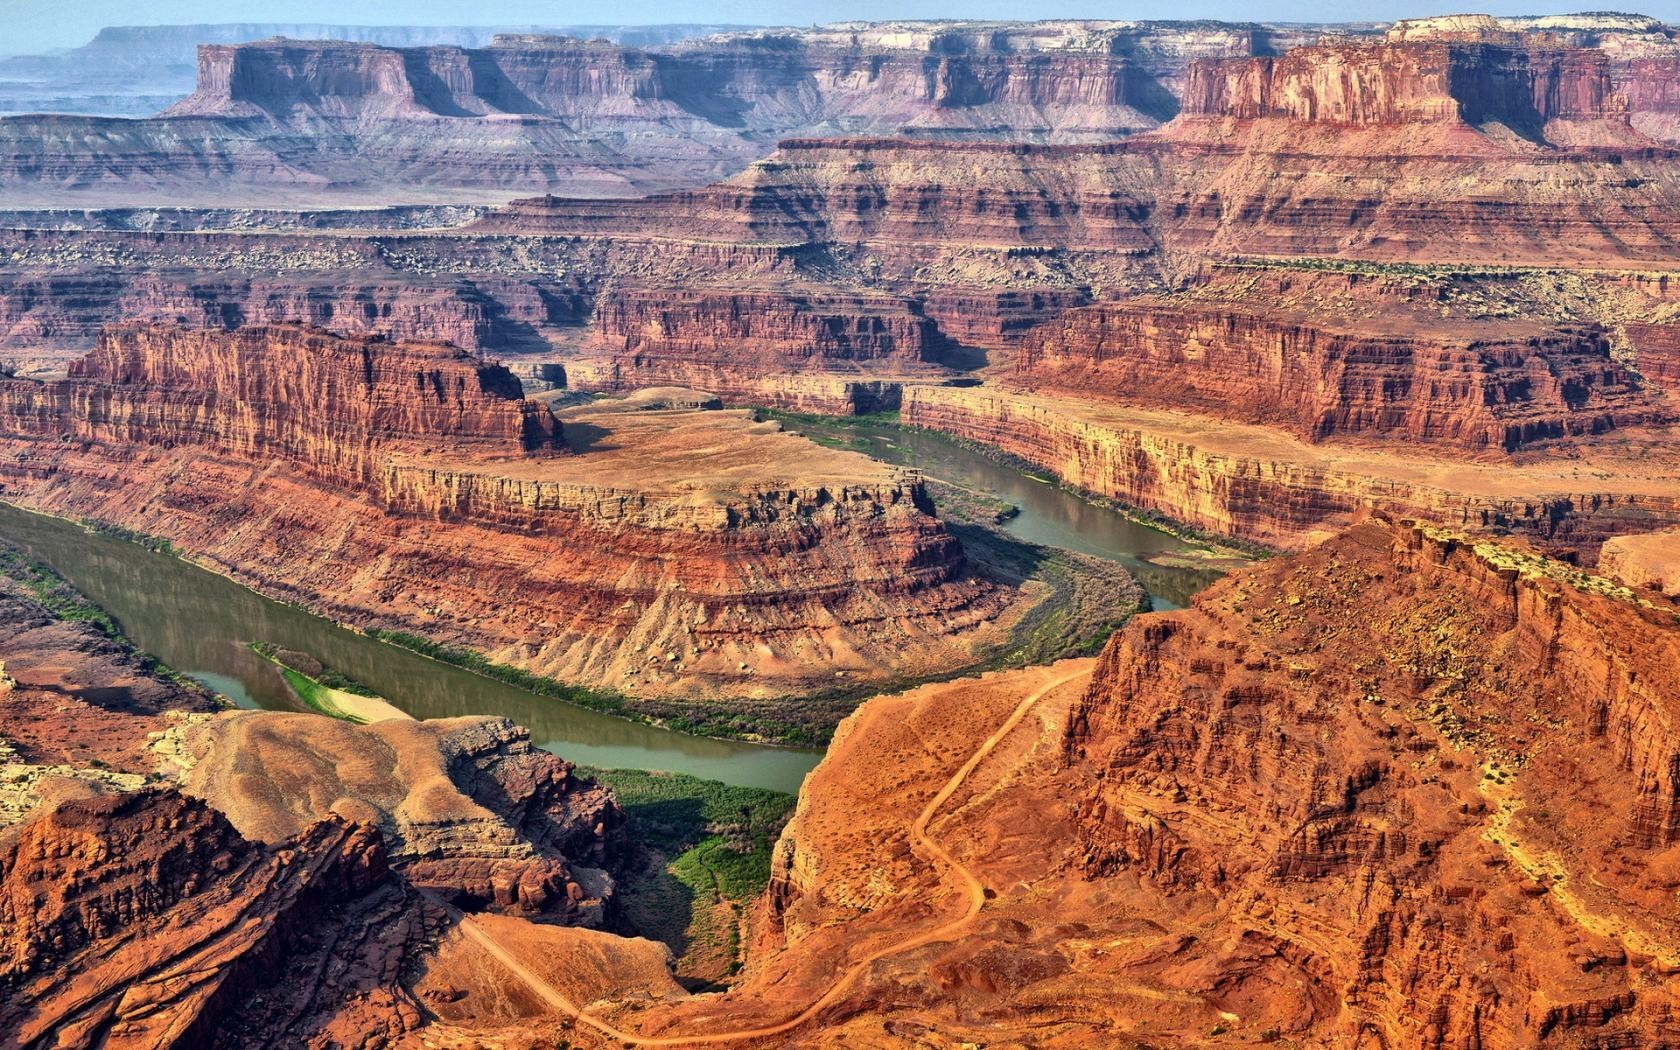 General 1680x1050 landscape desert rock formation canyon Utah USA rocks nature